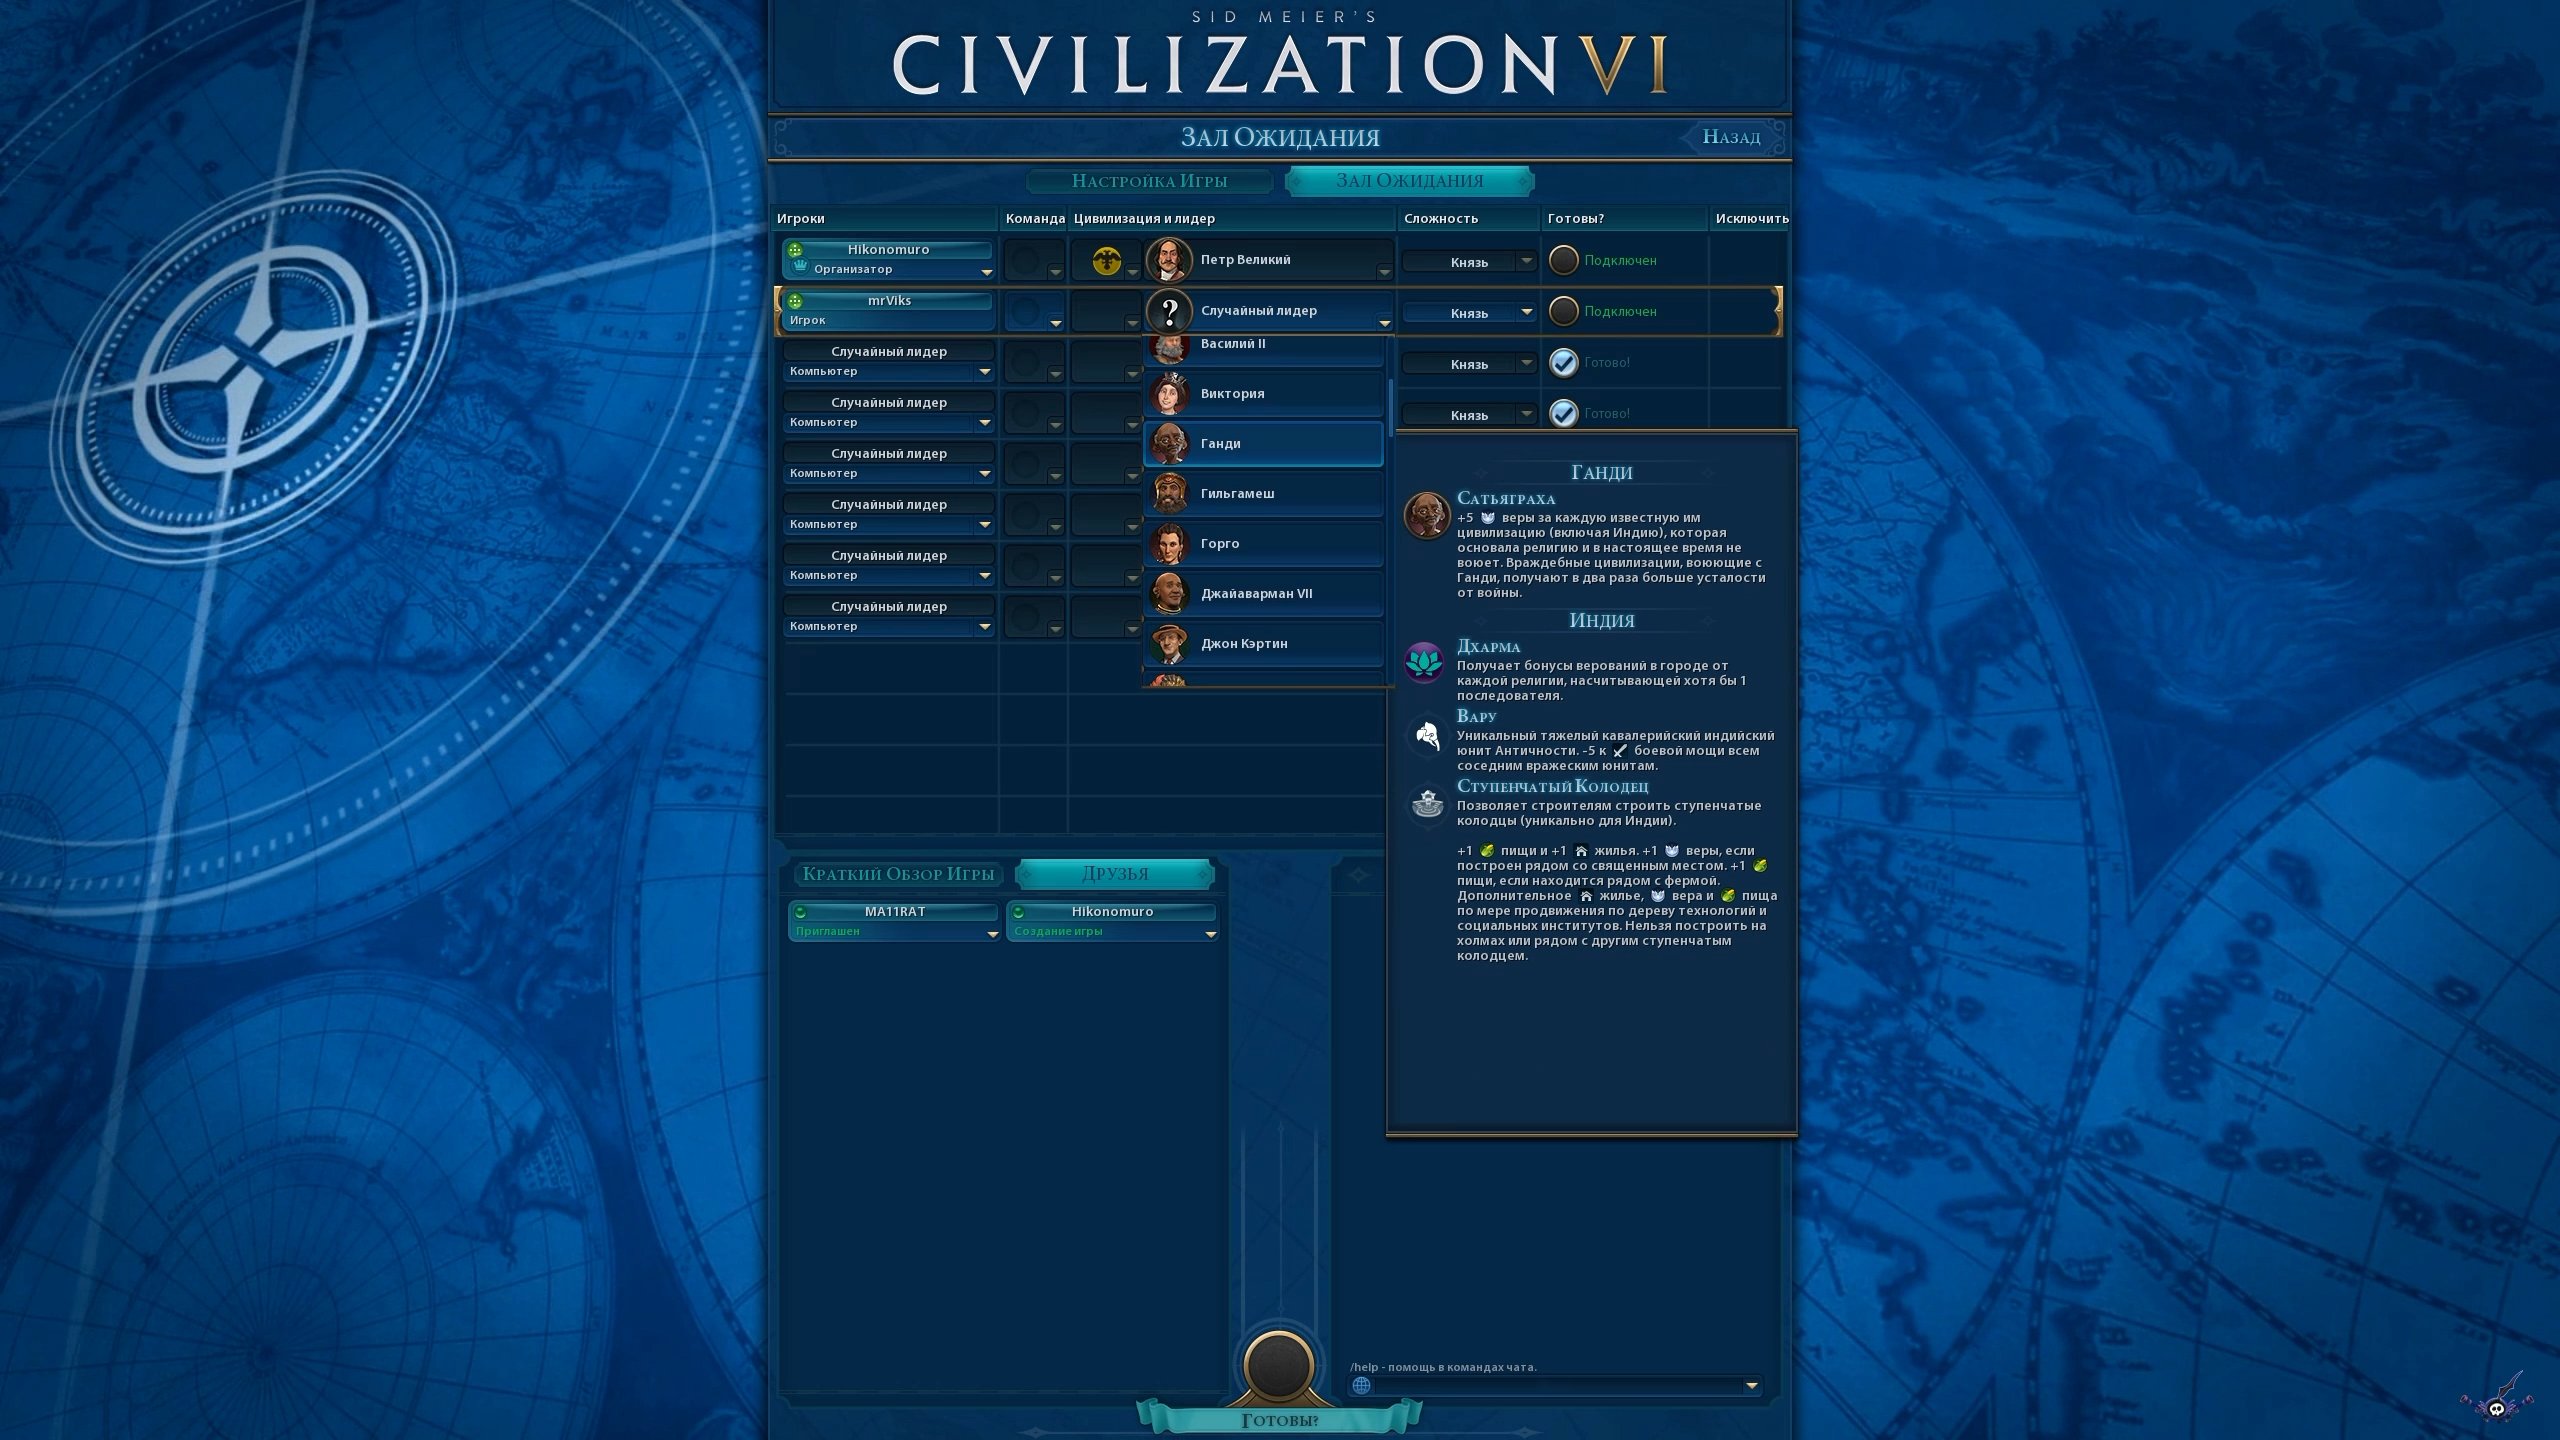 pc-1-civilization-vi-co-op---pervyy-gorod